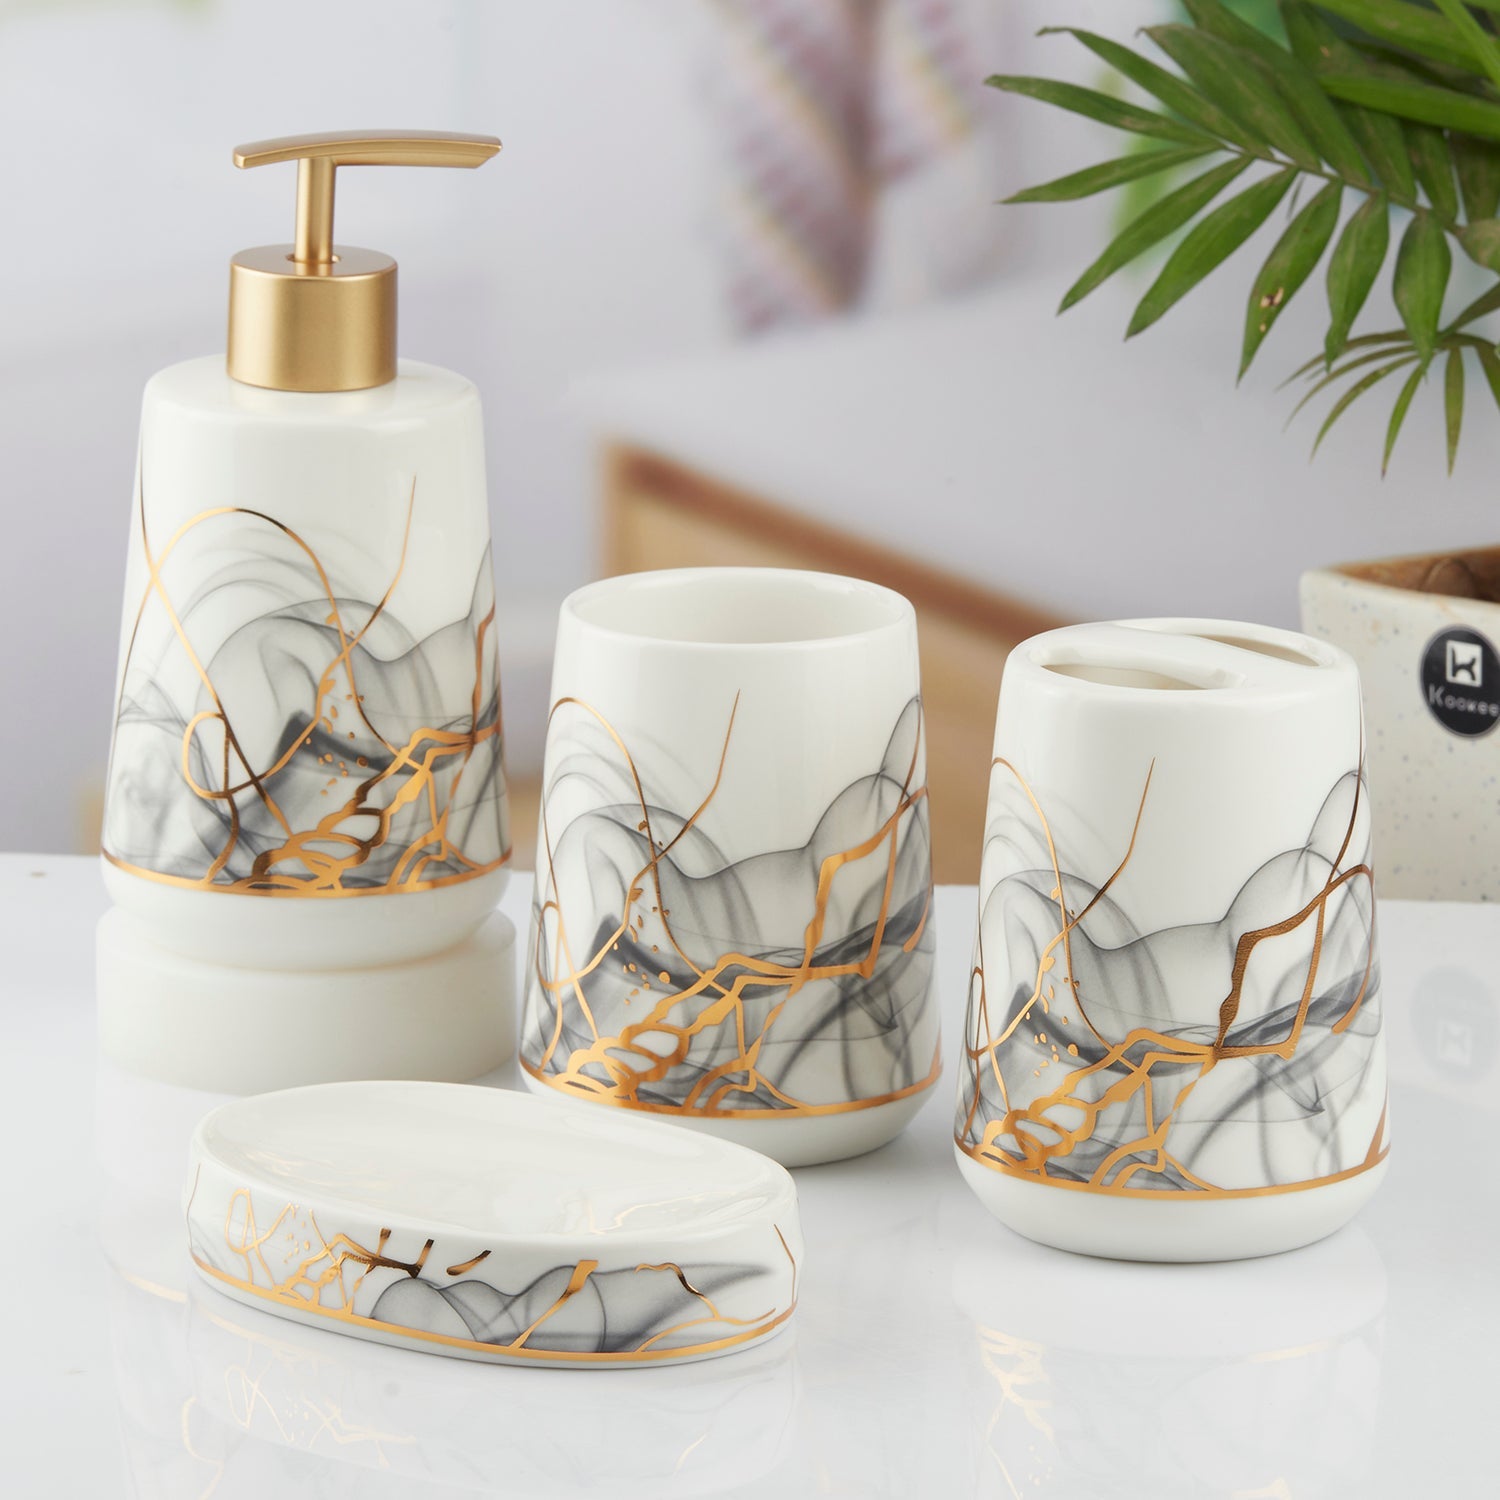 Ceramic Bathroom Accessories Set of 4 Bath Set with Soap Dispenser (9748)